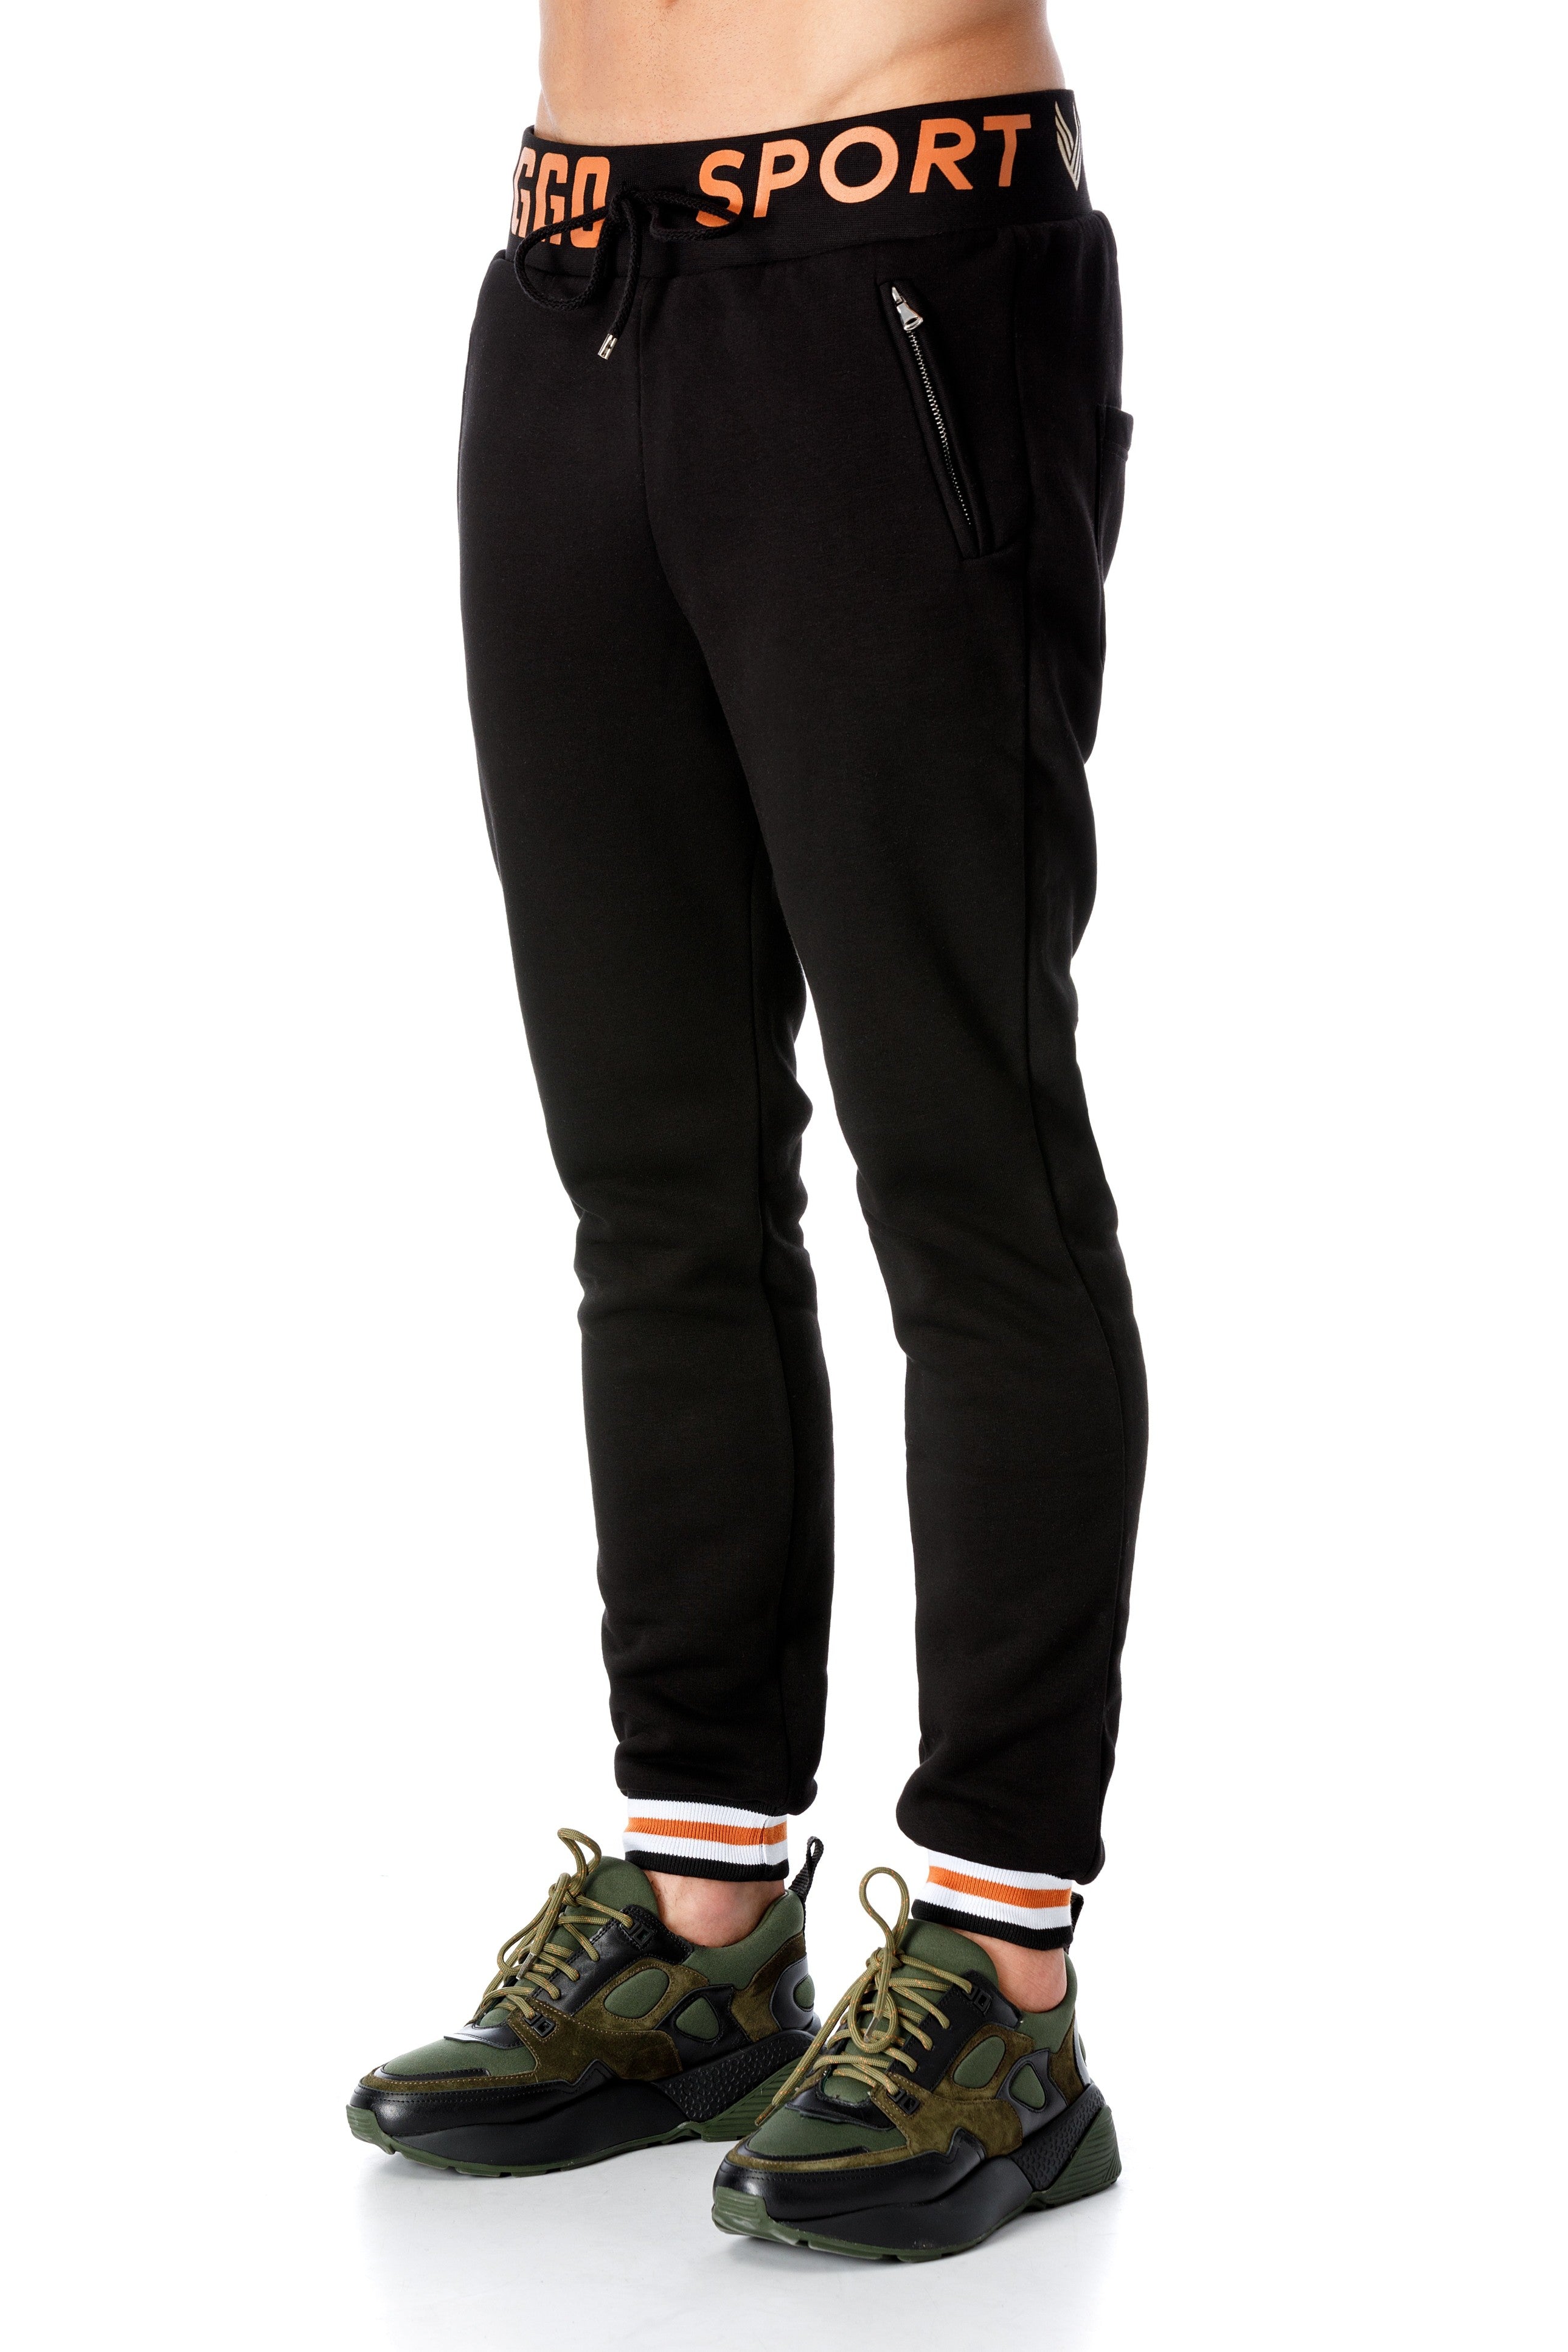 Black Sports Pants With Orange